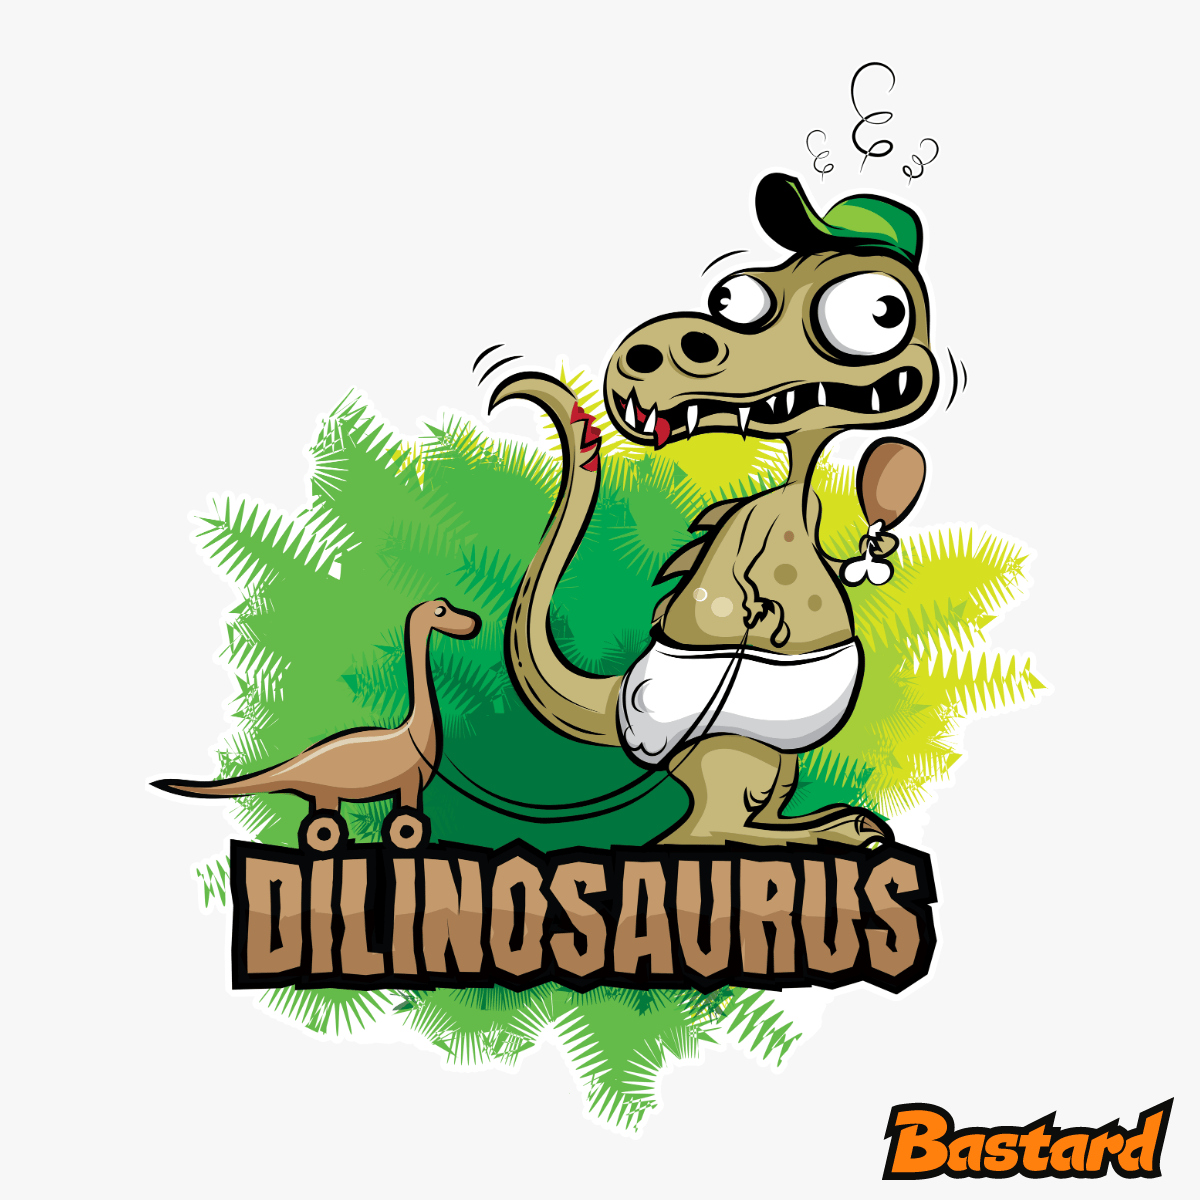 Dilinosaurus